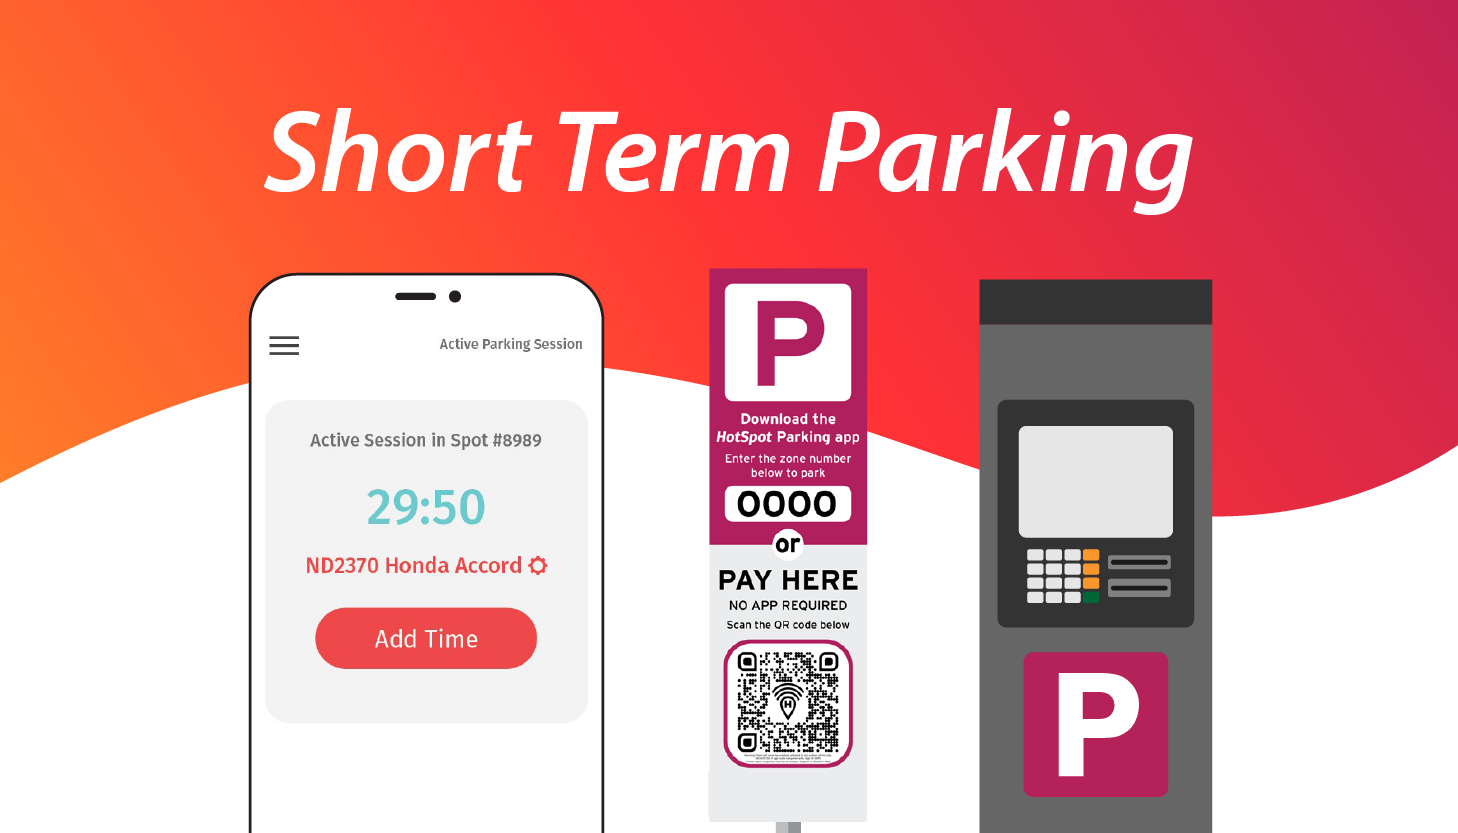 Short term parking options in Red Deer